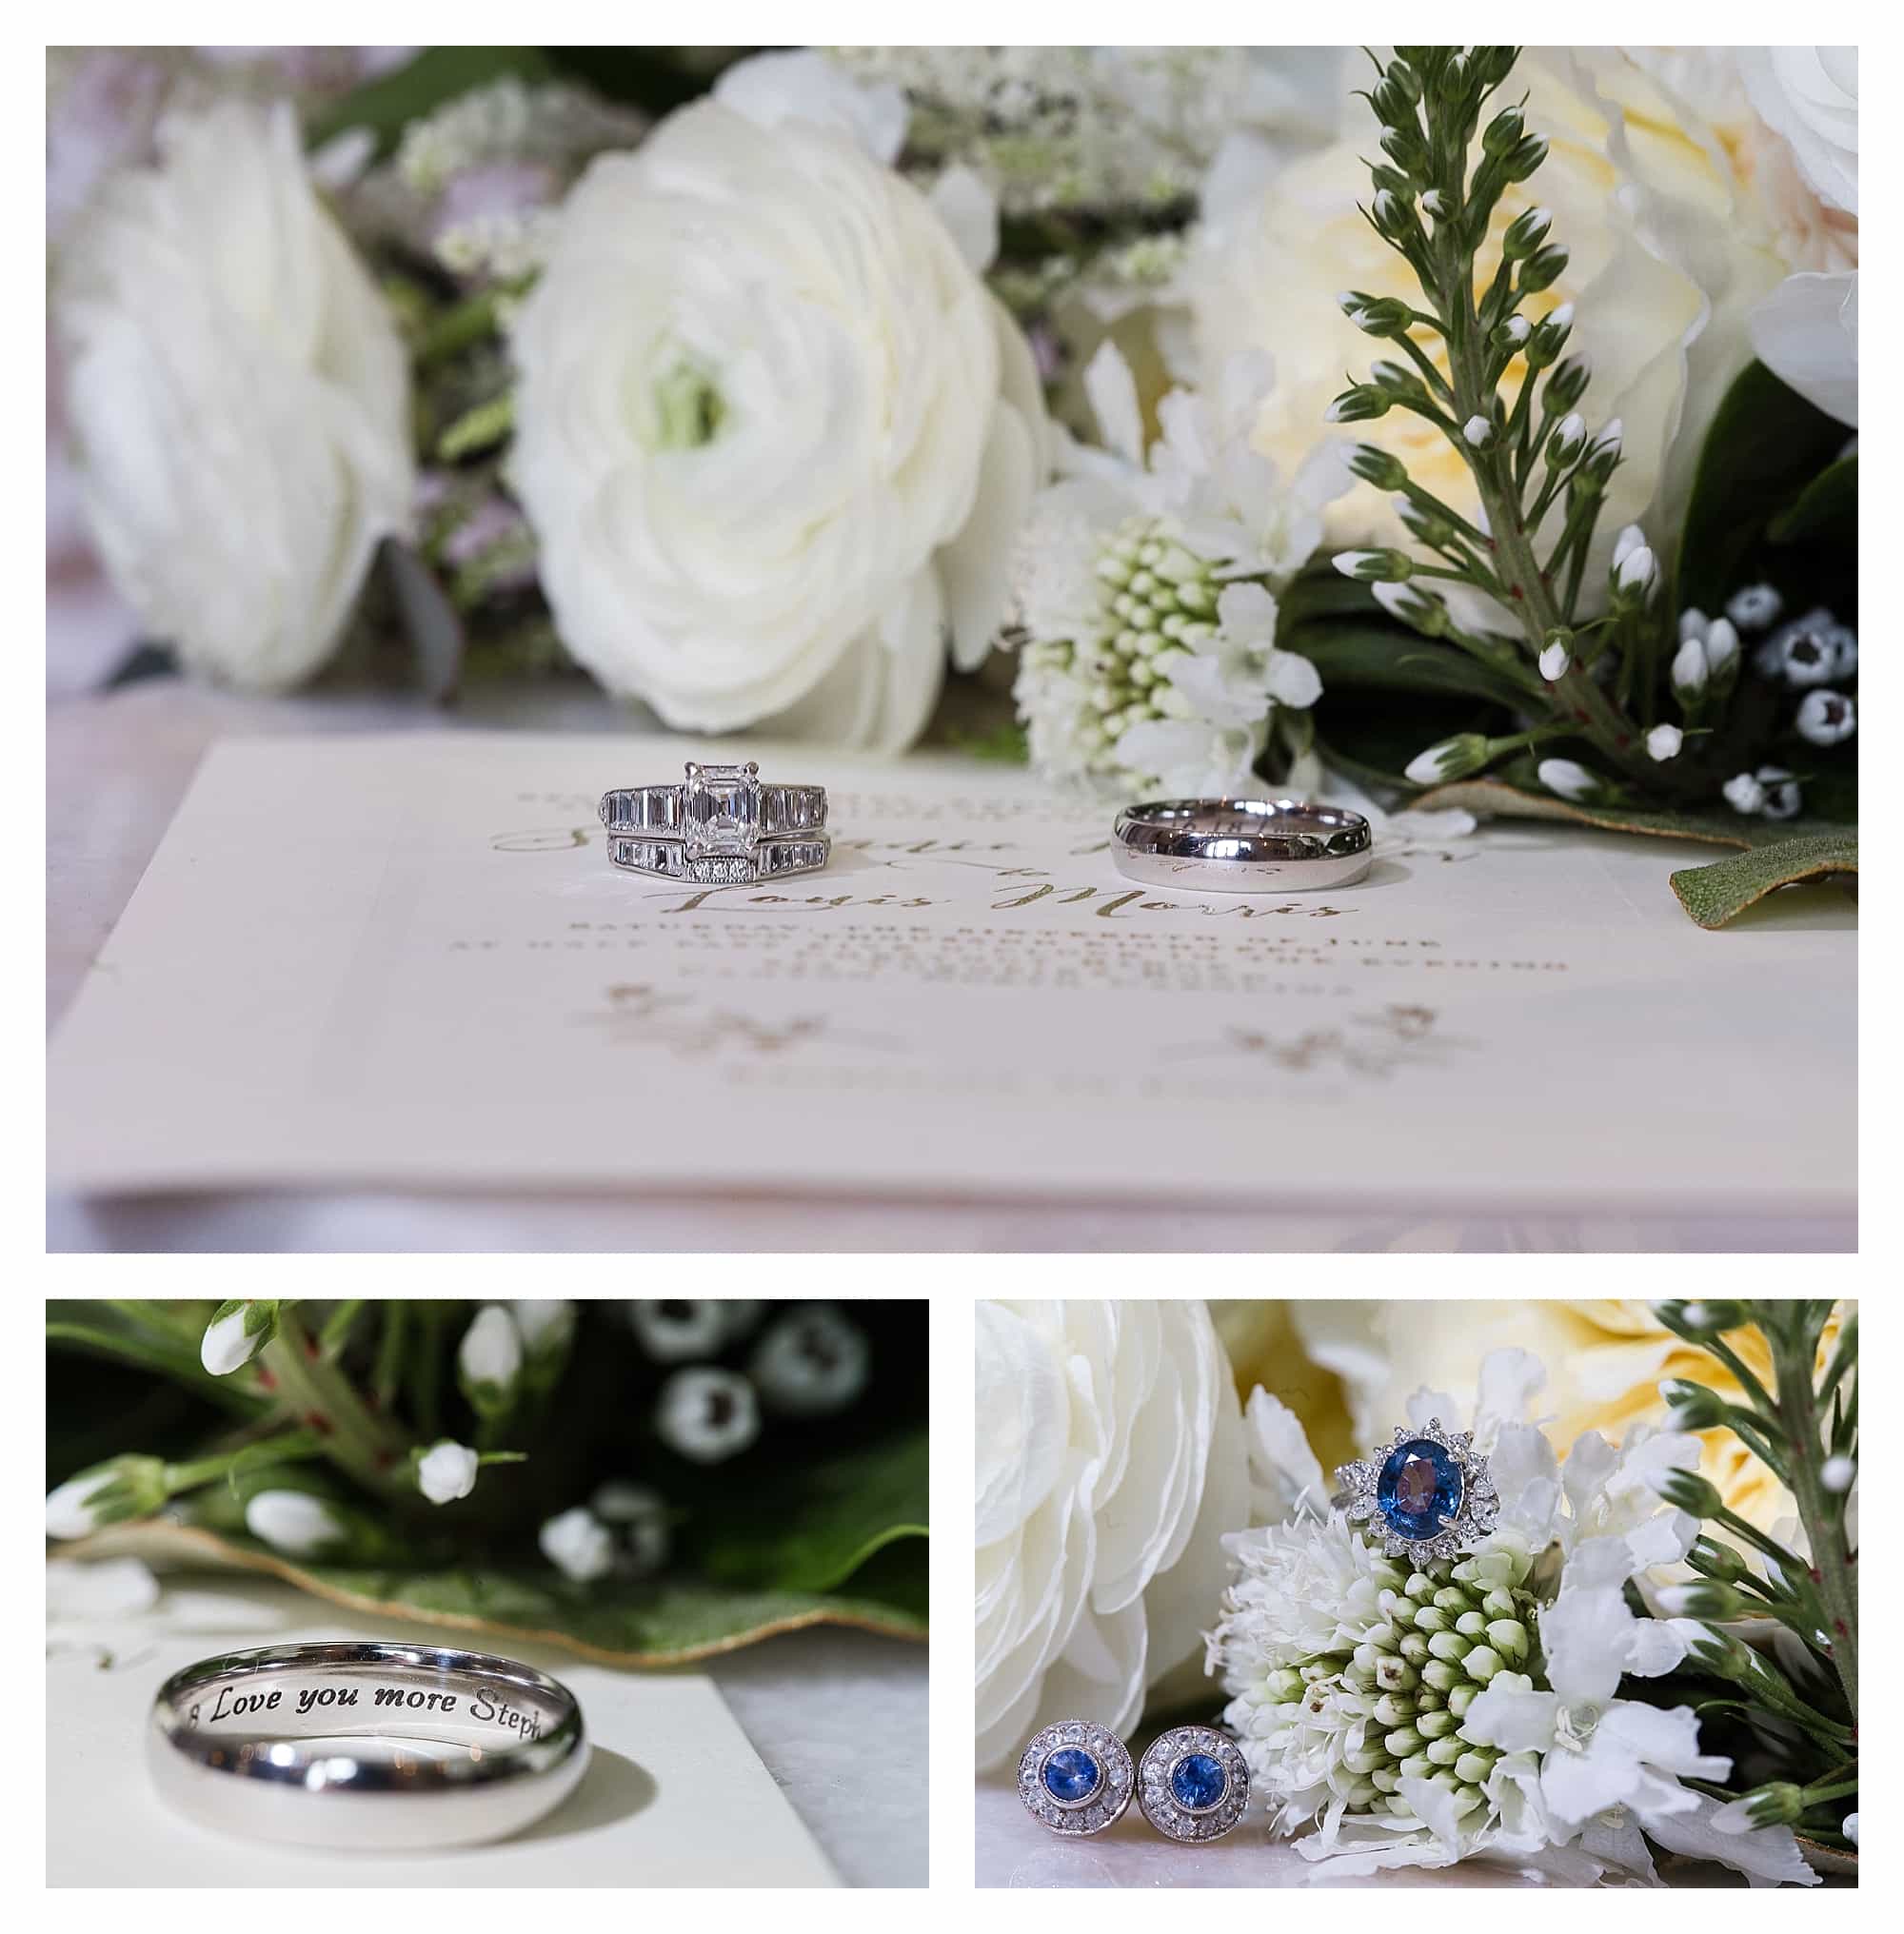 Wedding invitation and ring